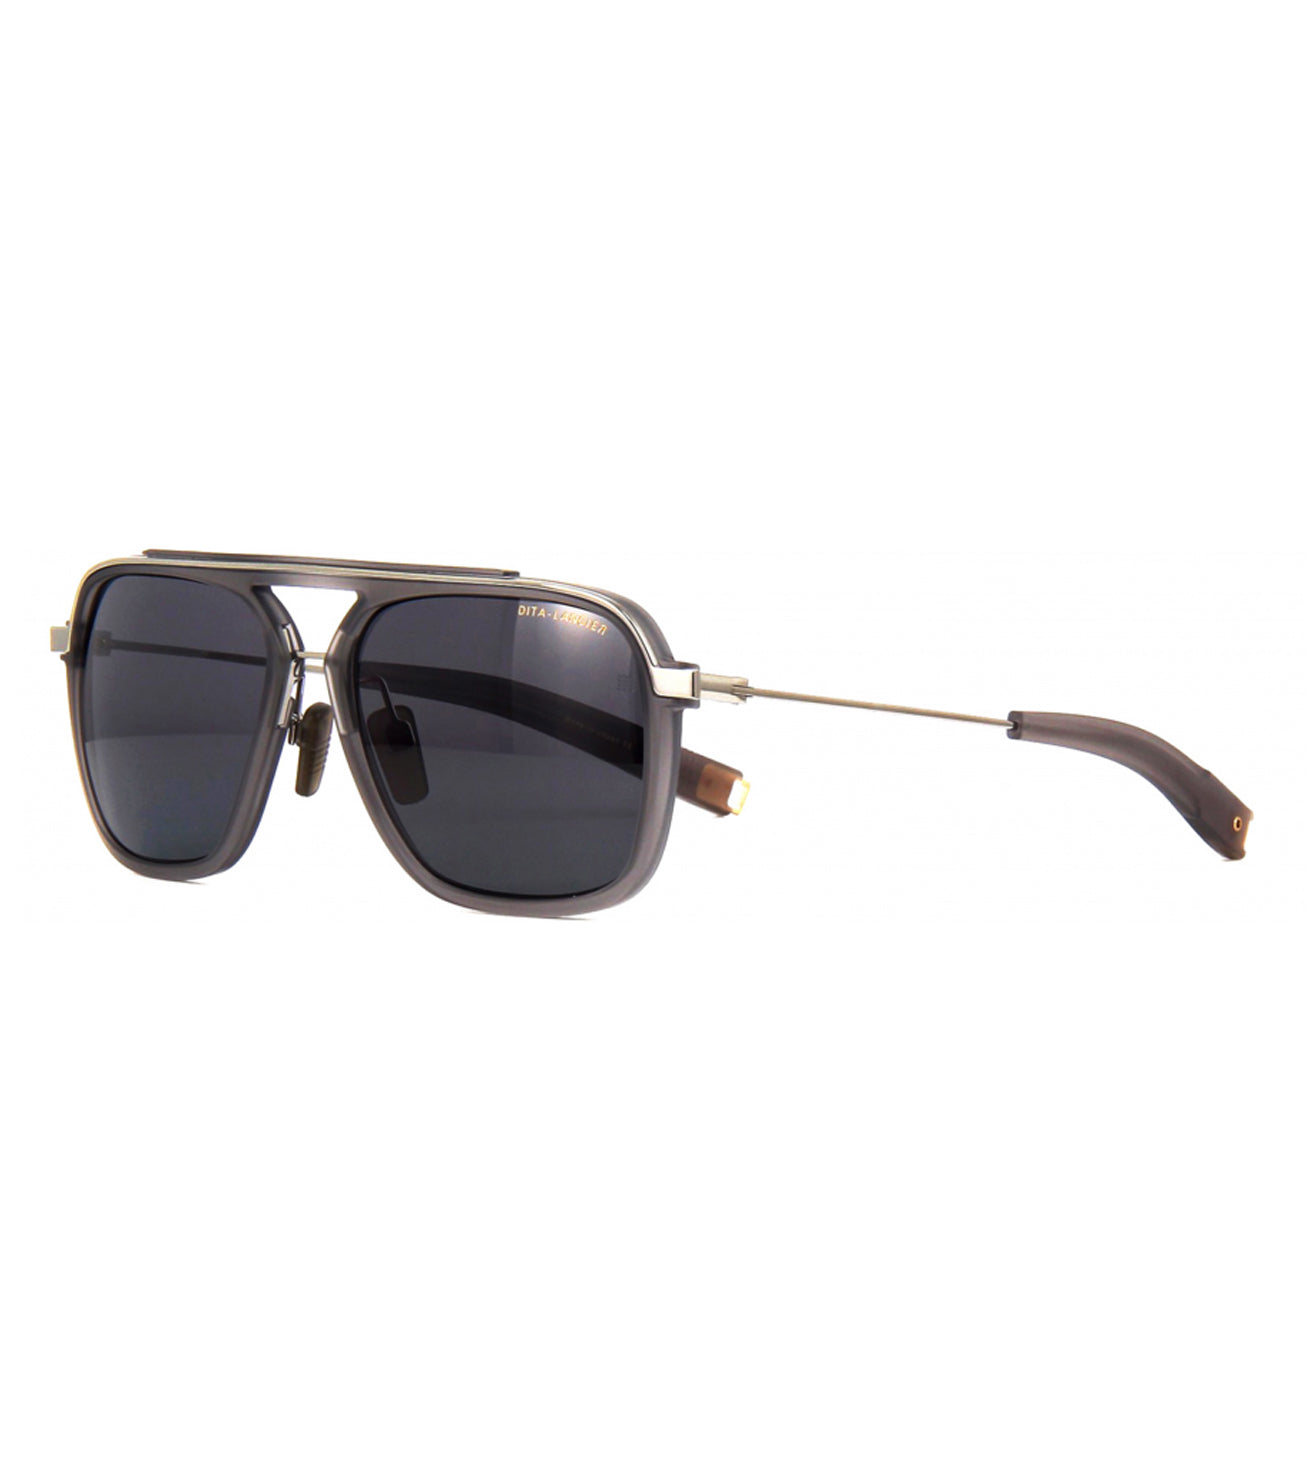 Grey Aviator Sunglasses